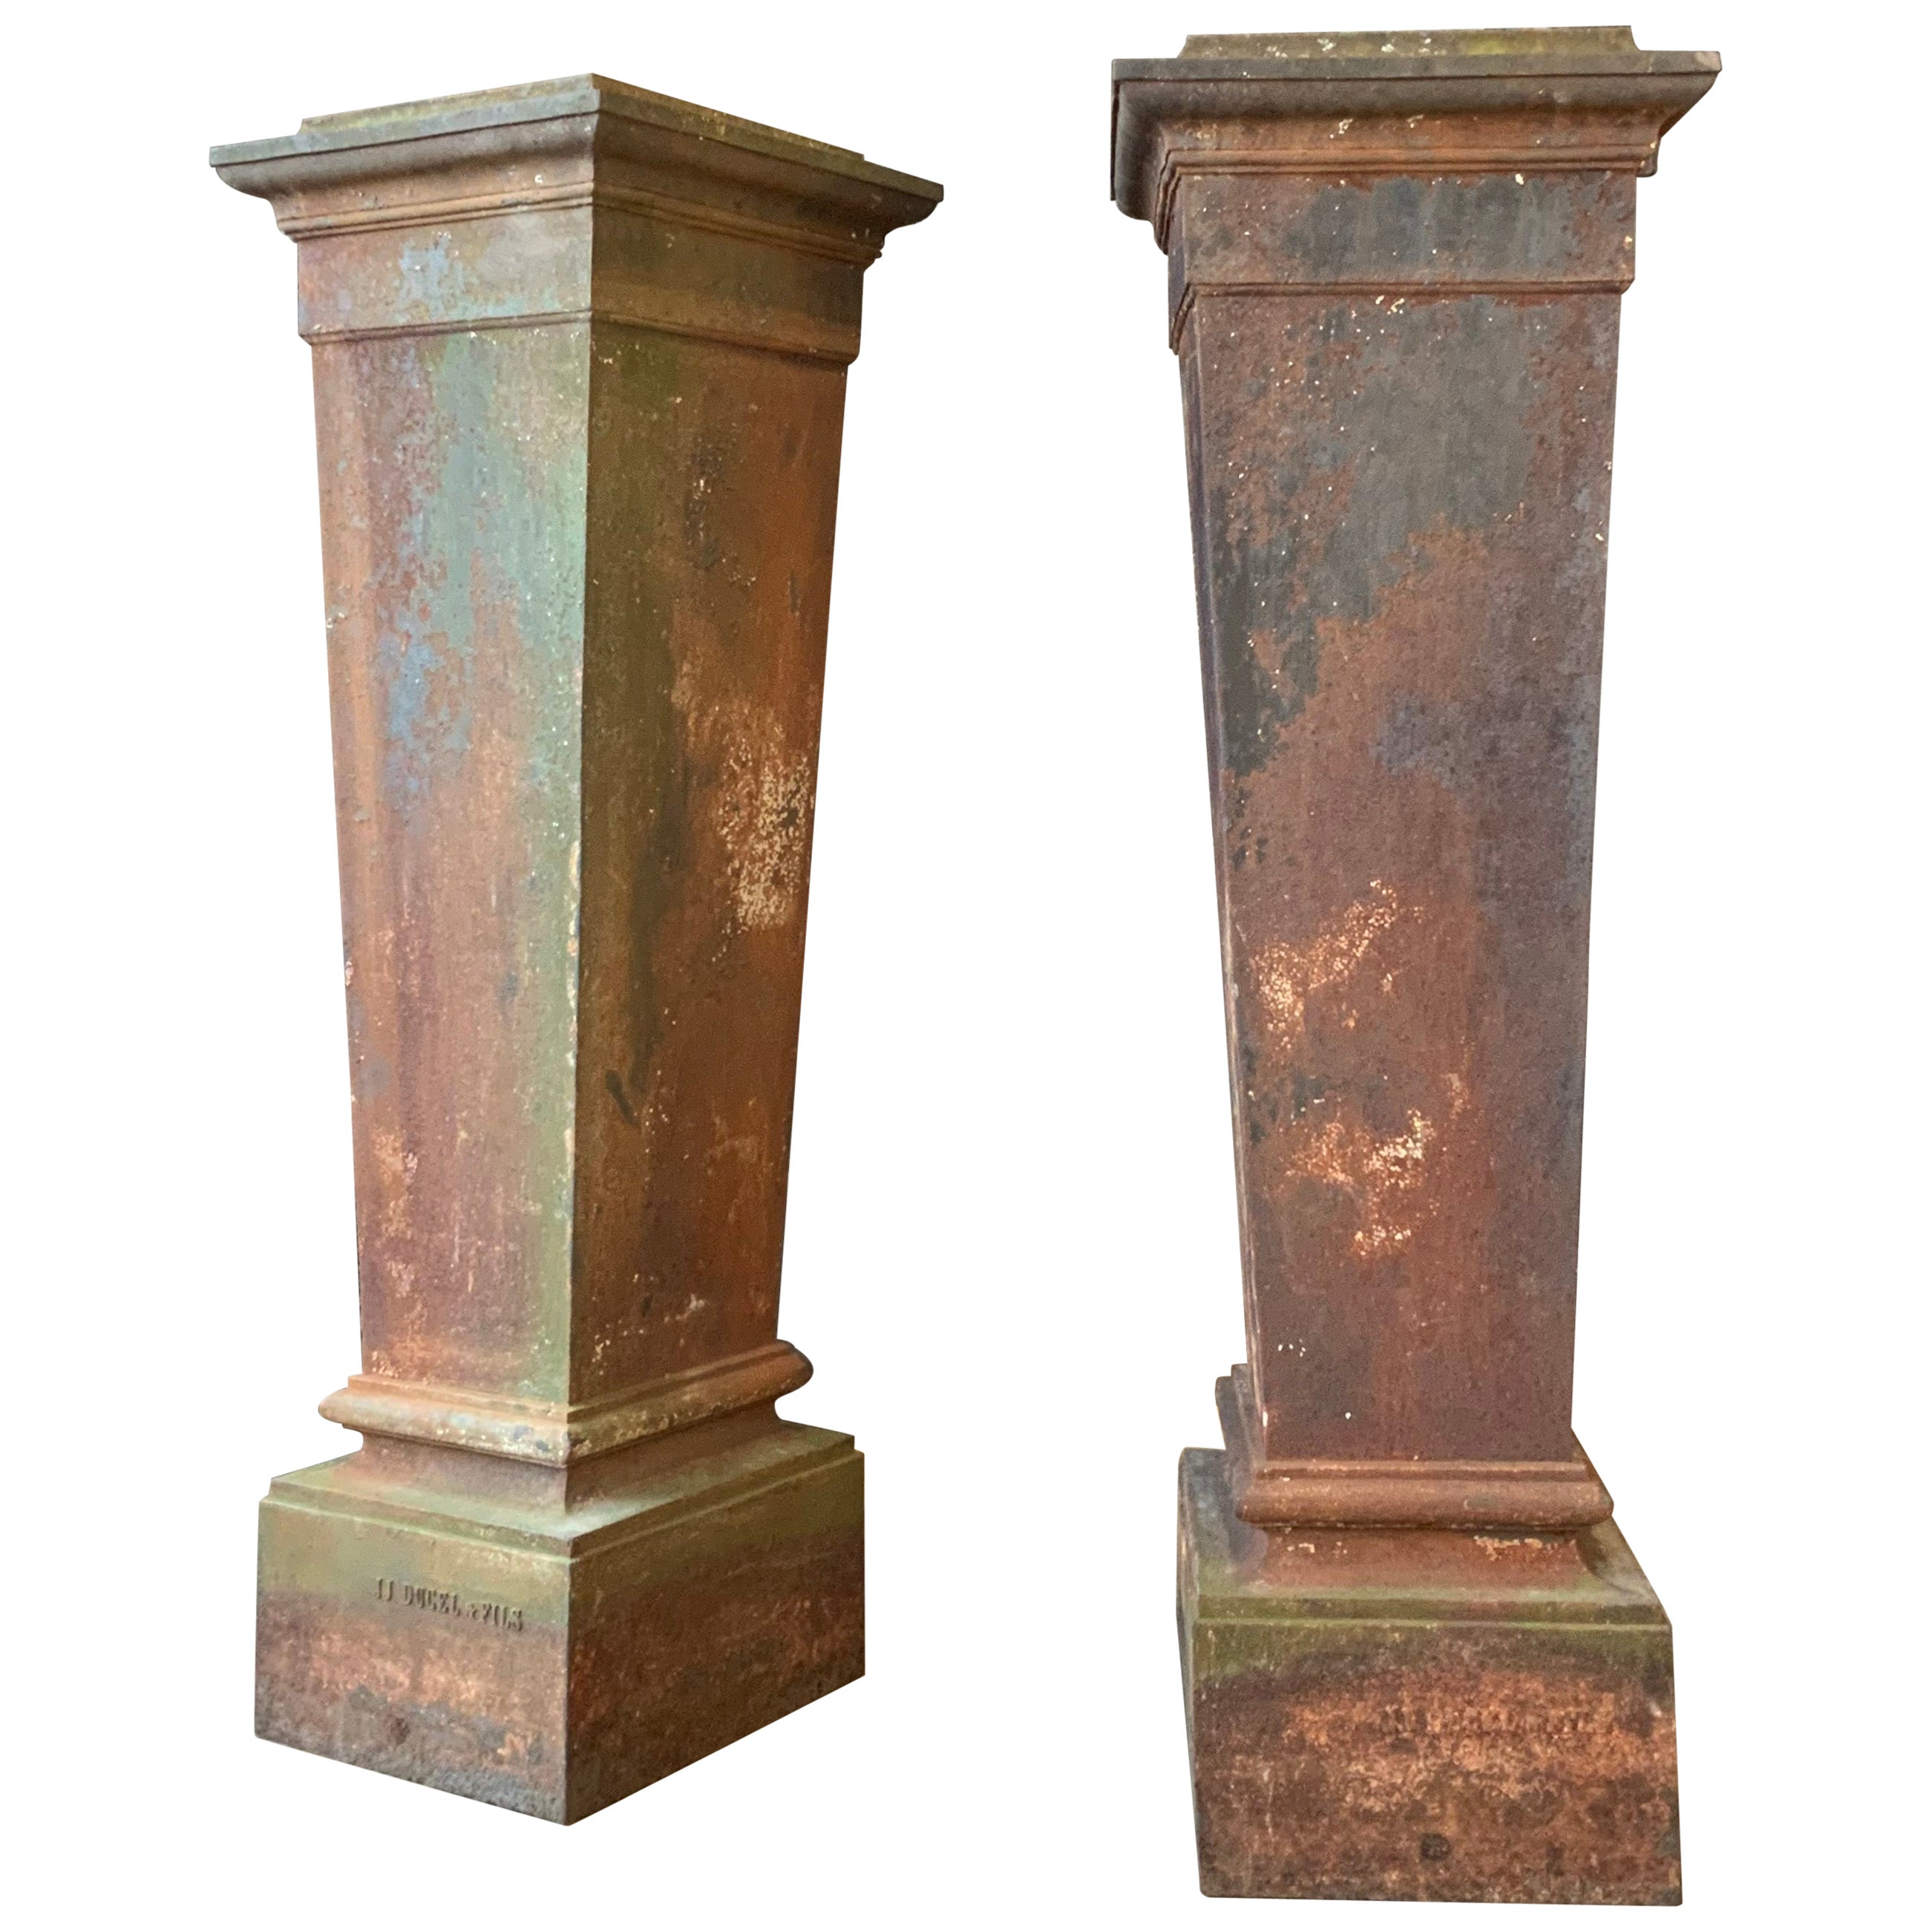 Pair of Antique French 19th Century Cast Iron Pedestals by Ducel et Fils